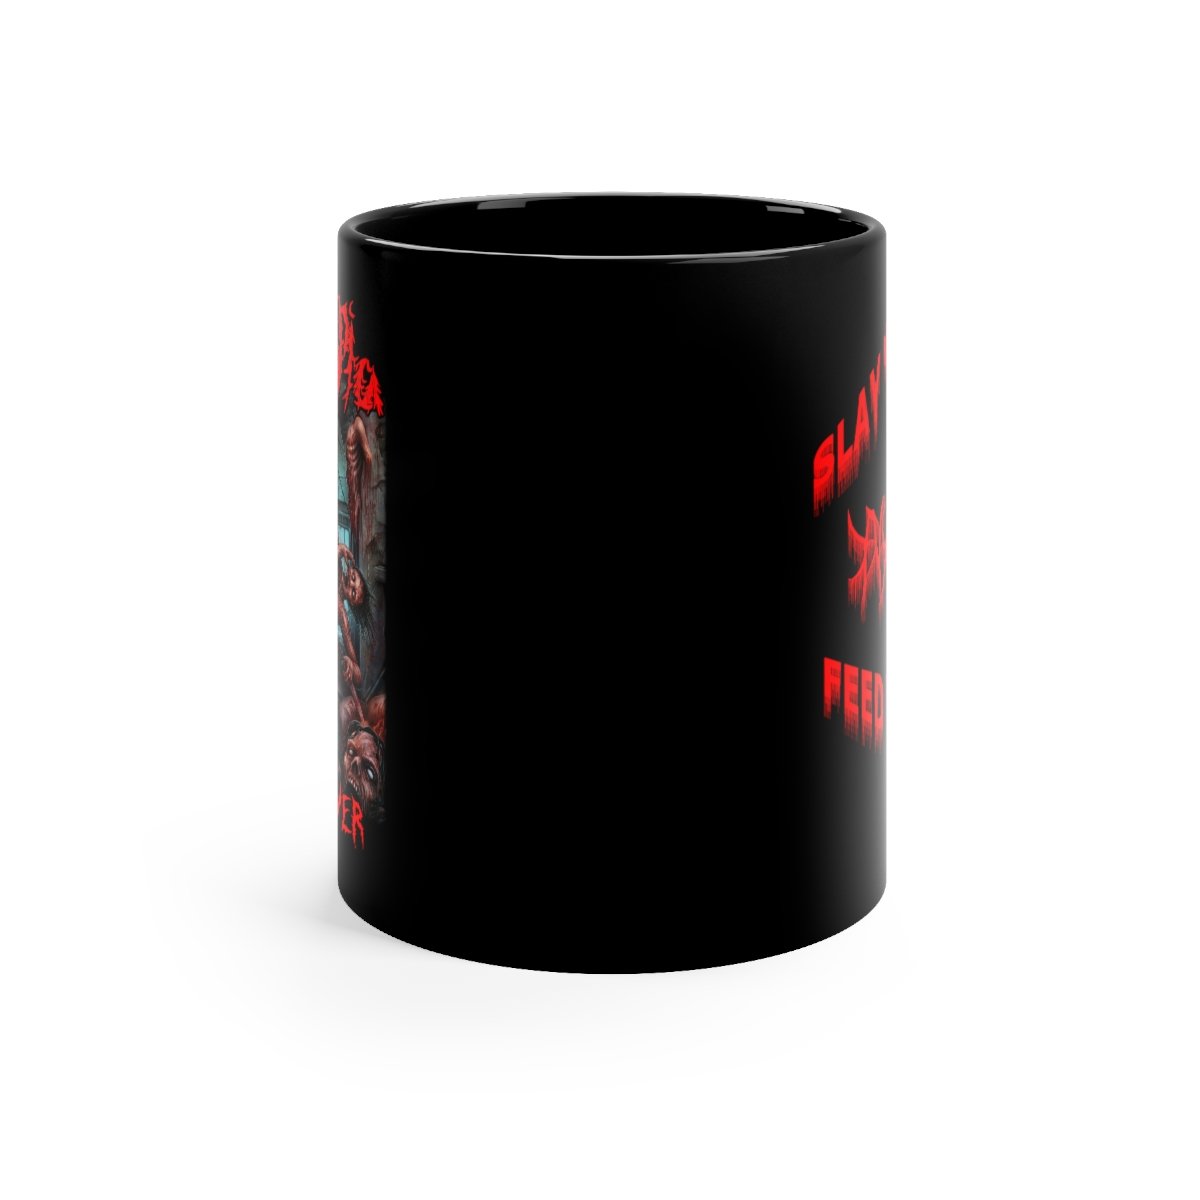 Nyctalopia – Flesh Slayer Black mug 11oz